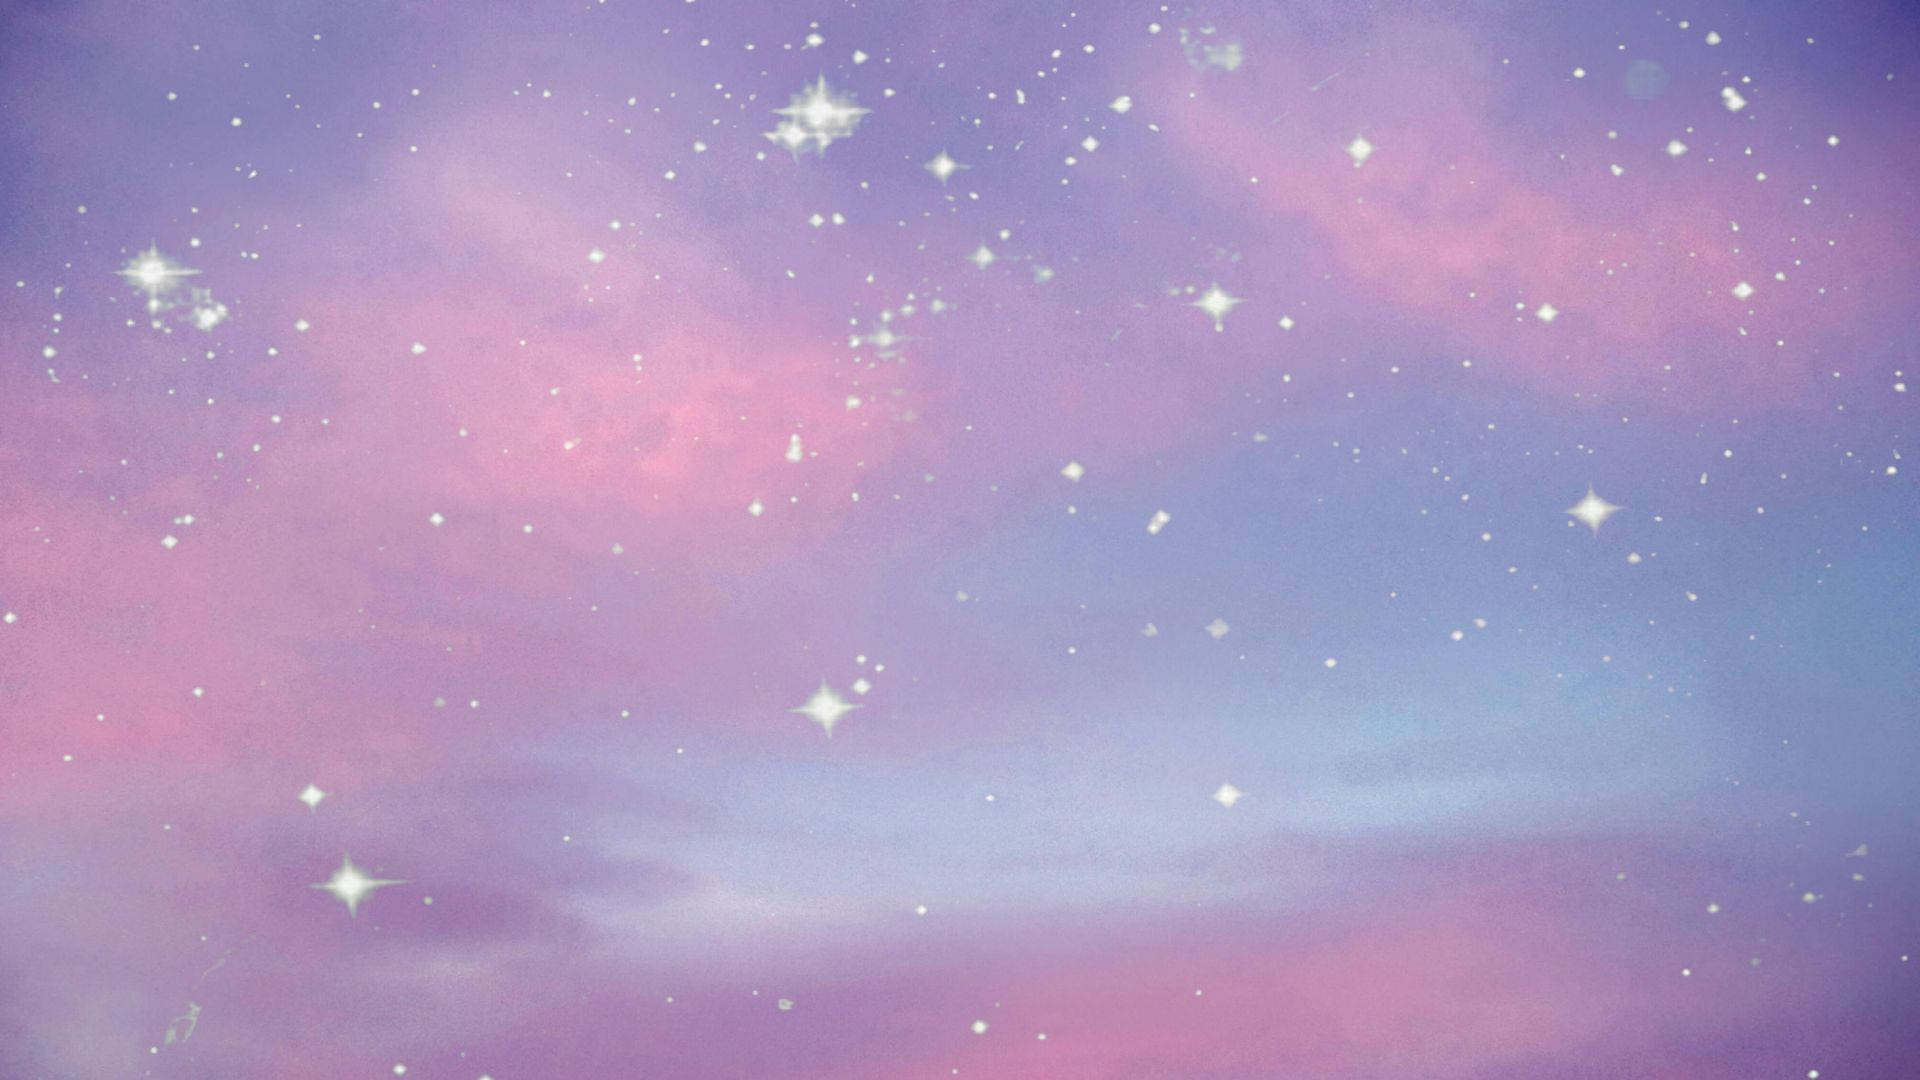 Stars Shining In A Cute Galaxy Background